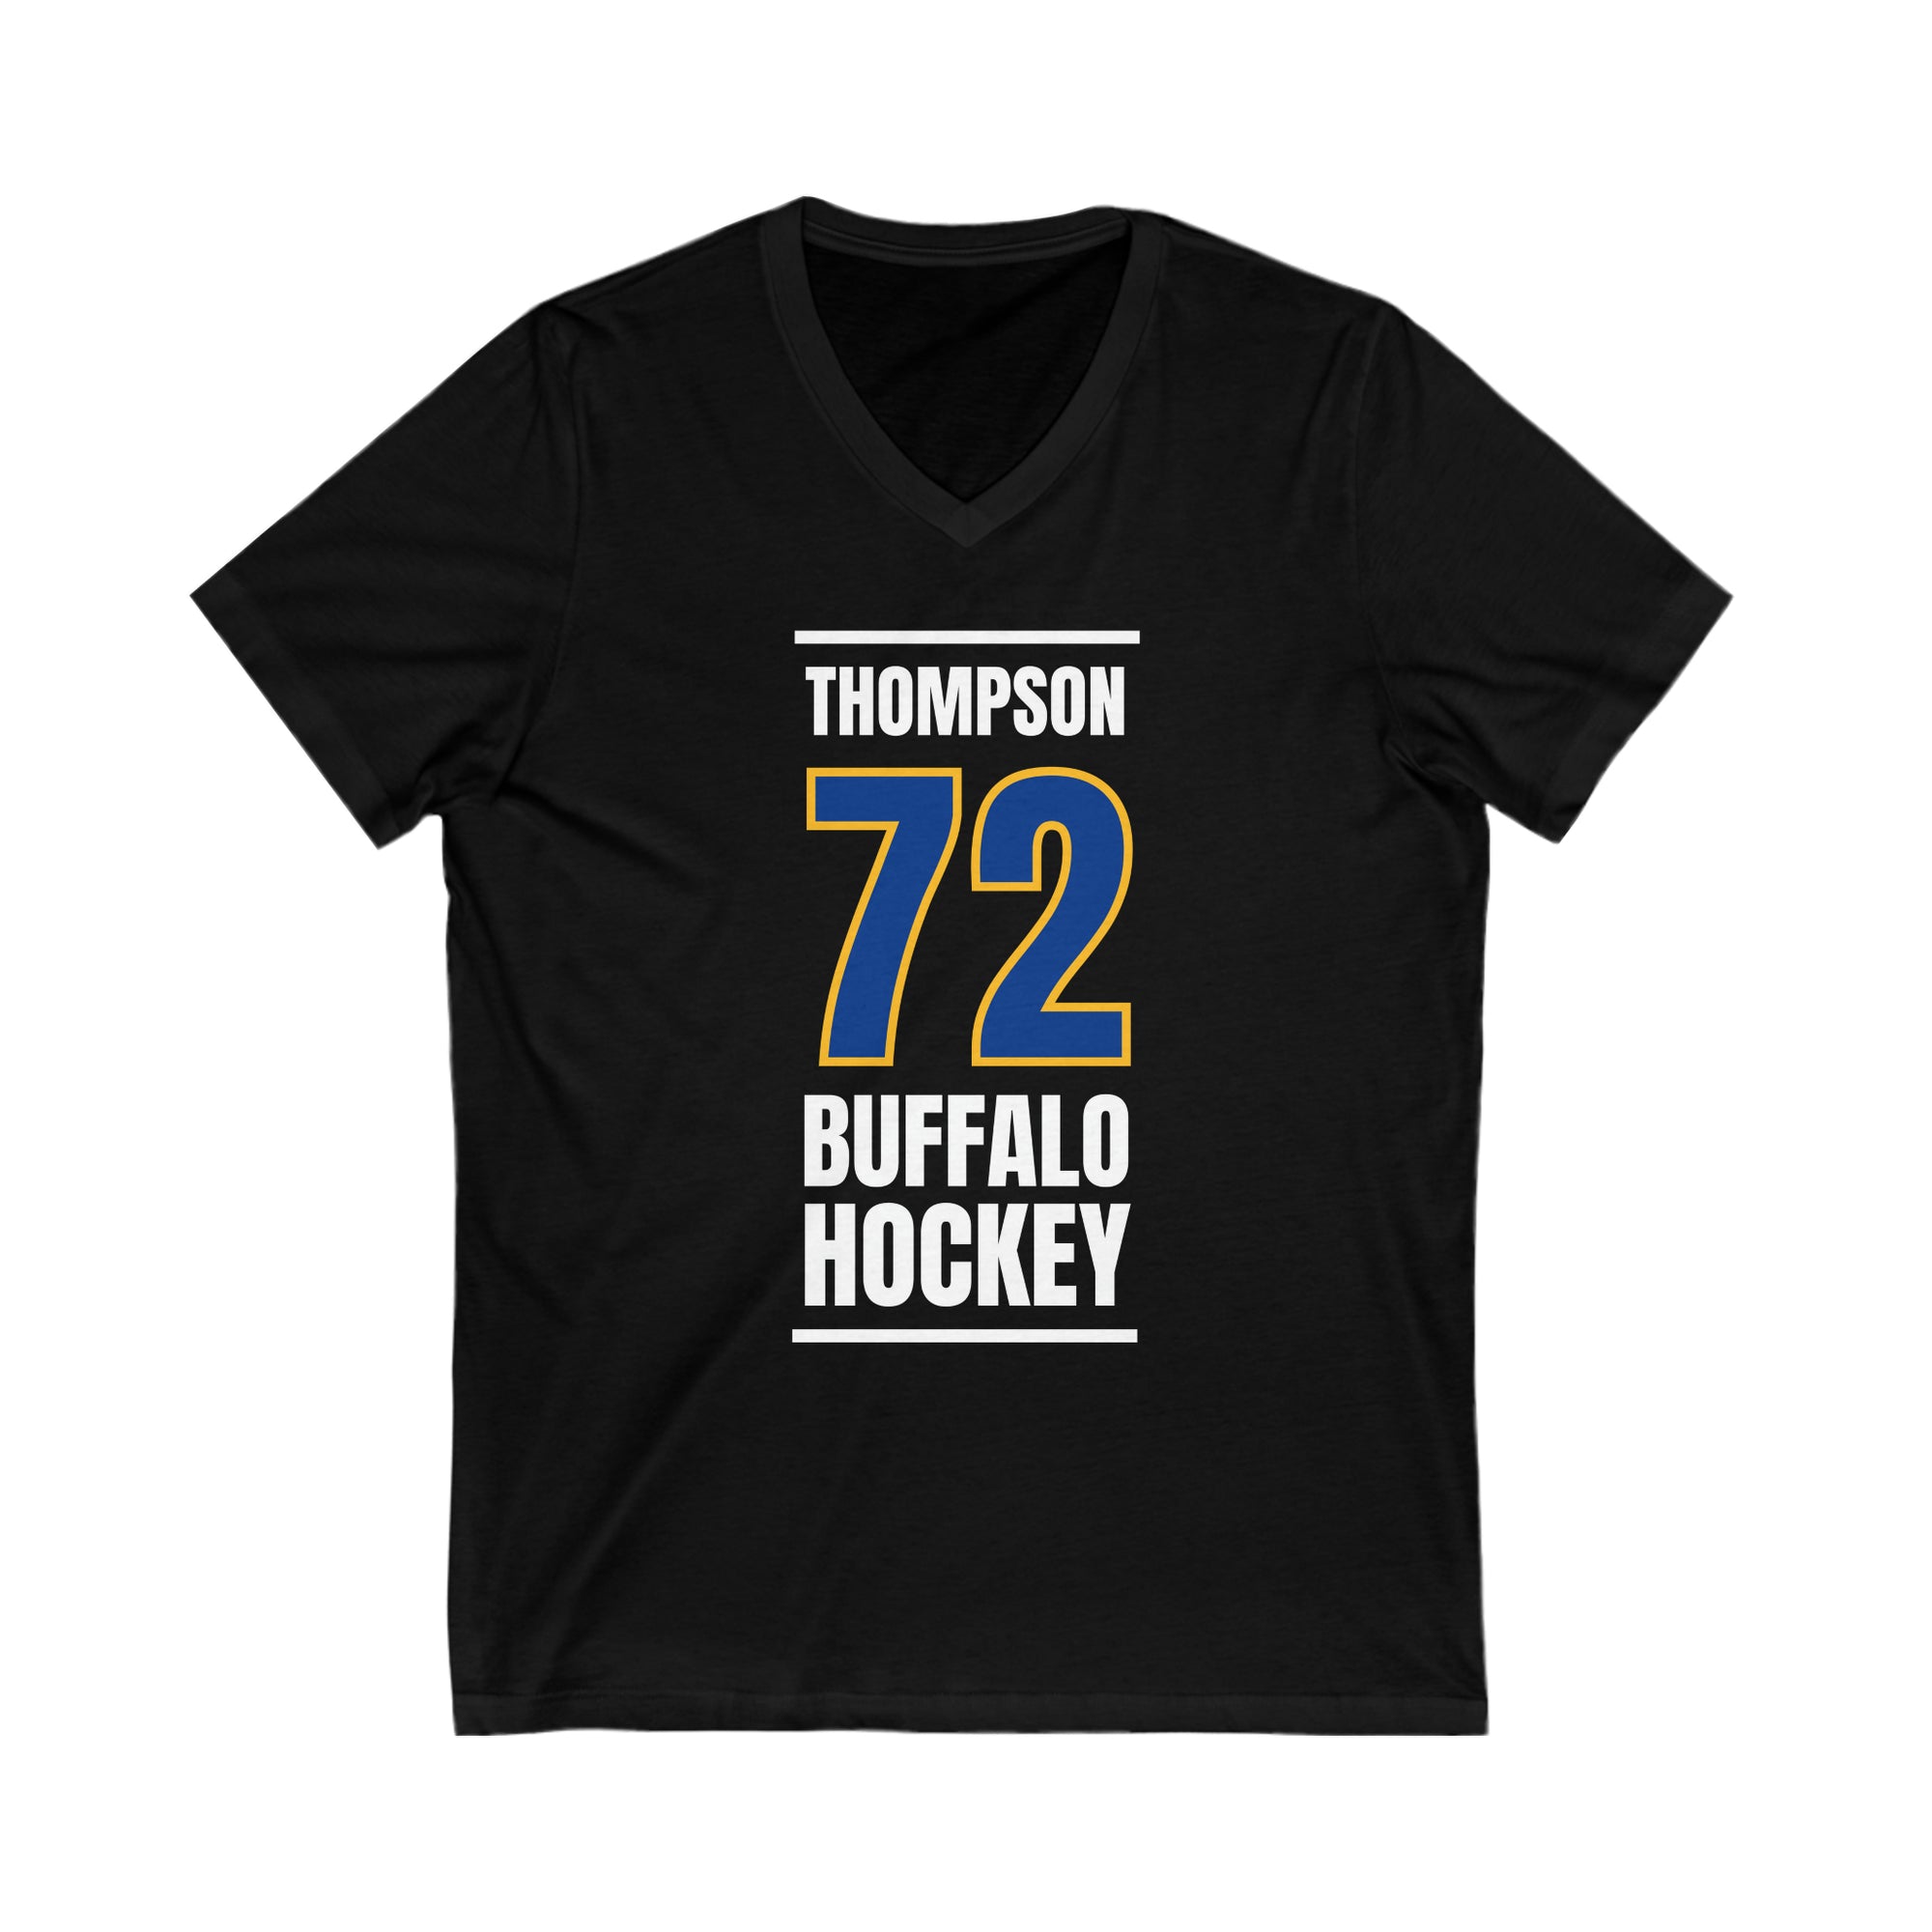 Thompson 72 Buffalo Hockey Royal Blue Vertical Design Unisex V-Neck Tee